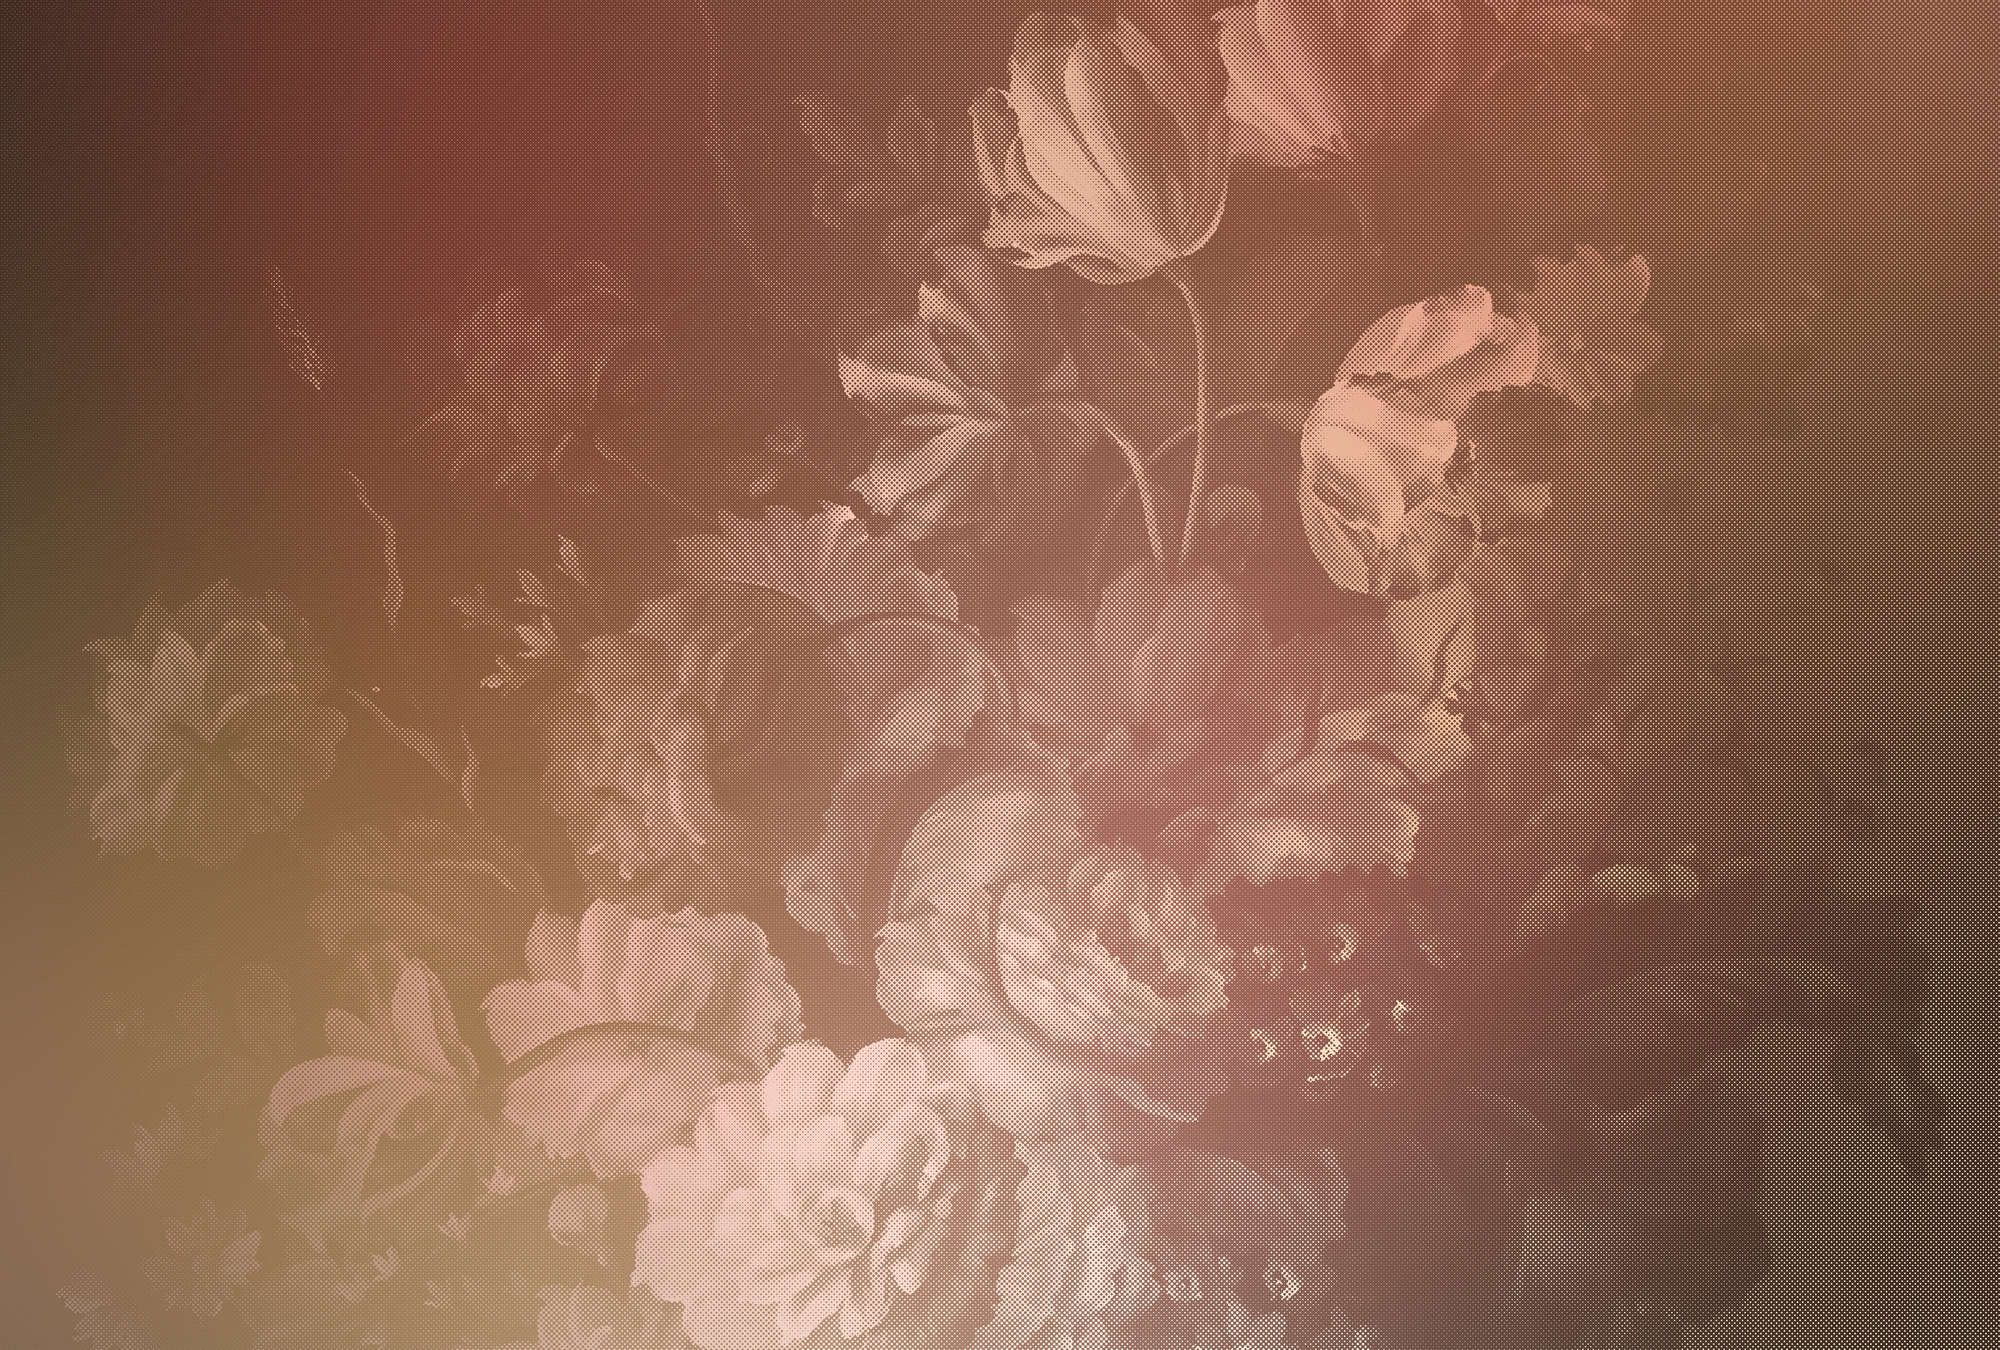             Holandés pastel 3 - Bouquet de papel pintado estilo holandés de flores - Rosa, Rojo | Nácar Liso
        